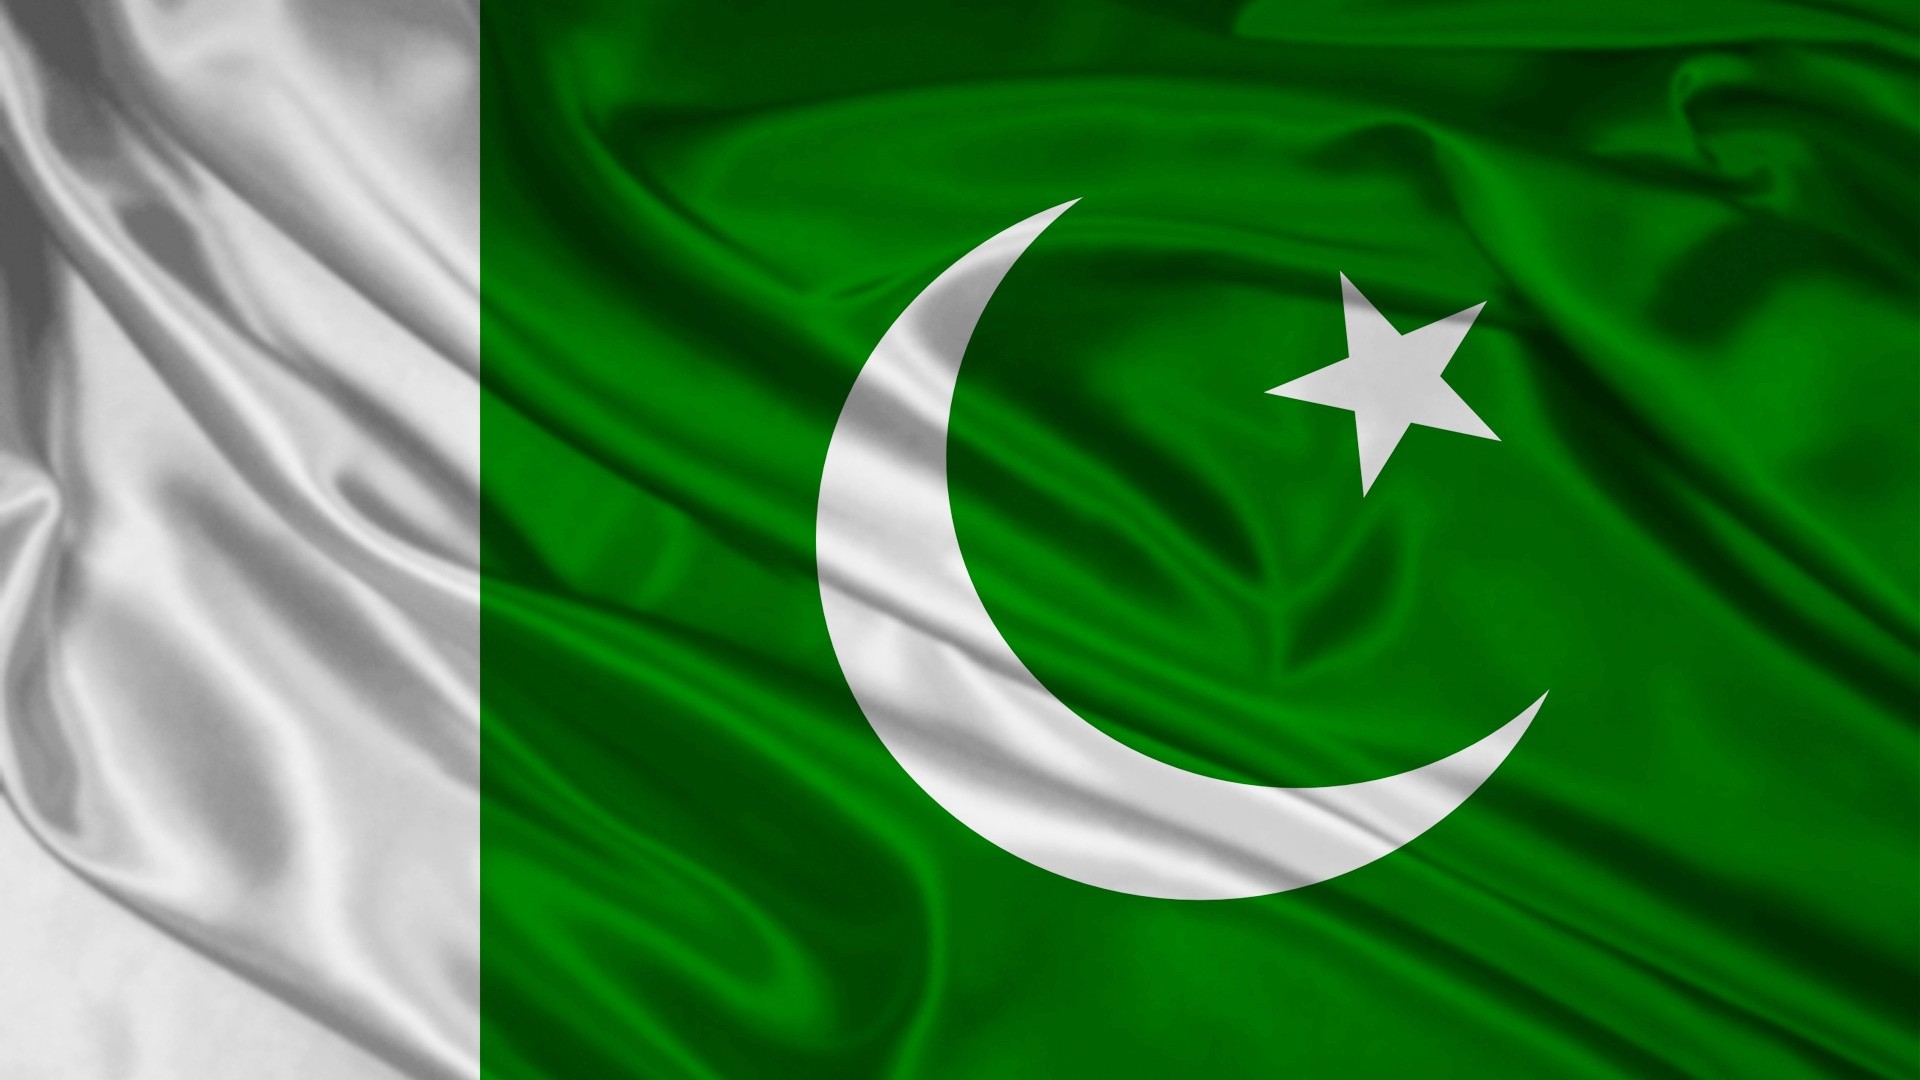 1920x1080 wallpaper pakistani flag Pakistani Flag Wallpapers HD Pictures – One HD  Wallpaper Pictures Backgrounds FREE Download